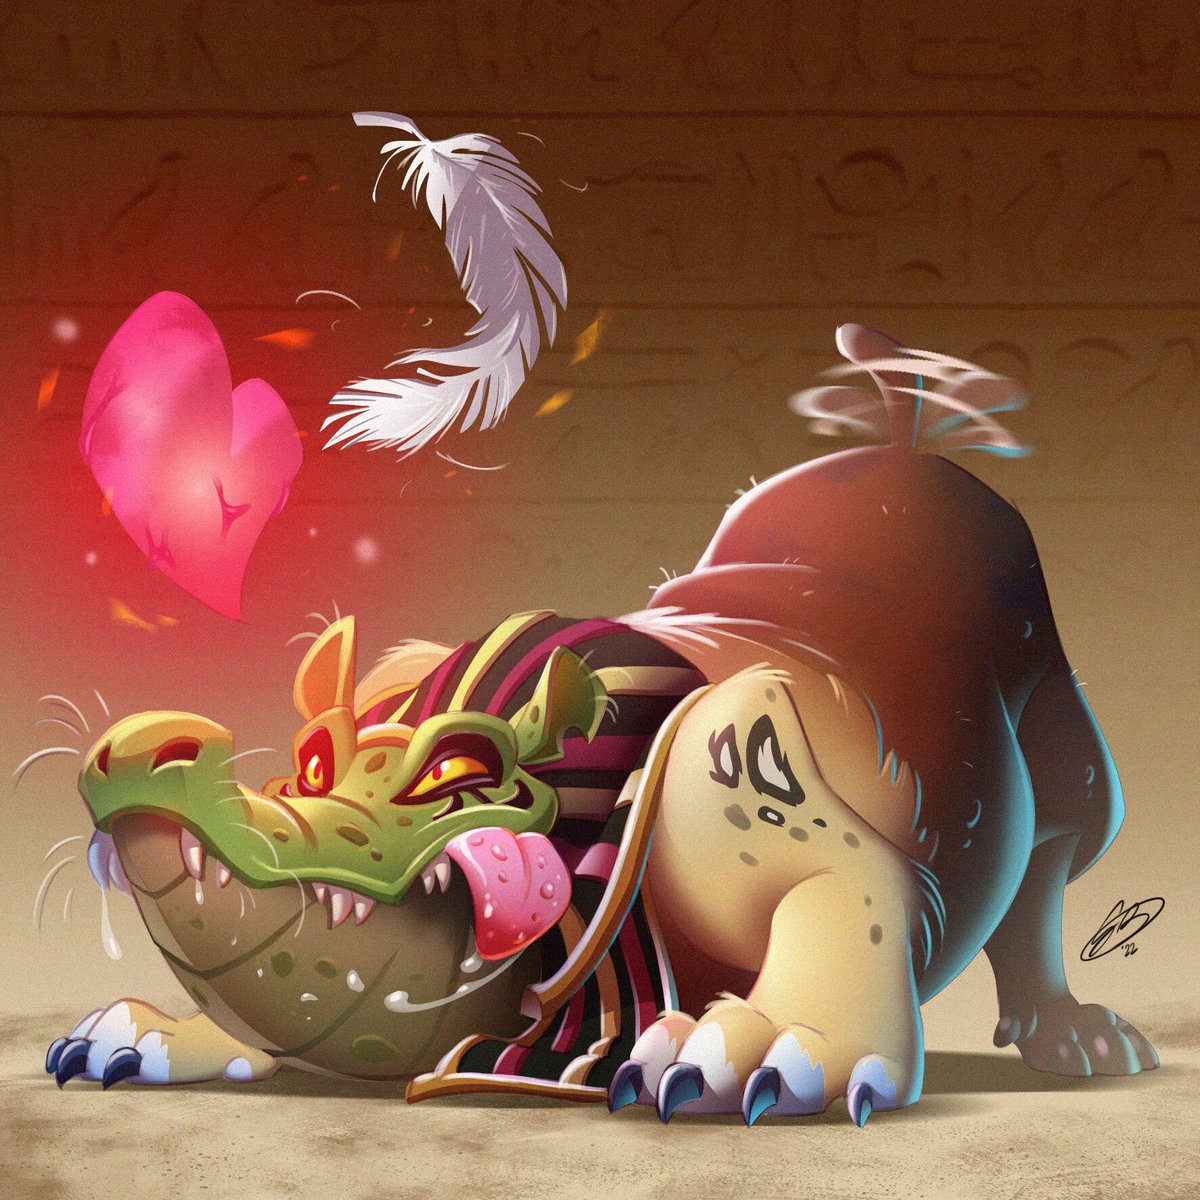 Yuppee #PortfolioDay2023 

#ZeldaTearsOfTheKingdom #Rayman #earthwormjim #Egypt #characterdesign #conceptartist #cartoonstyle